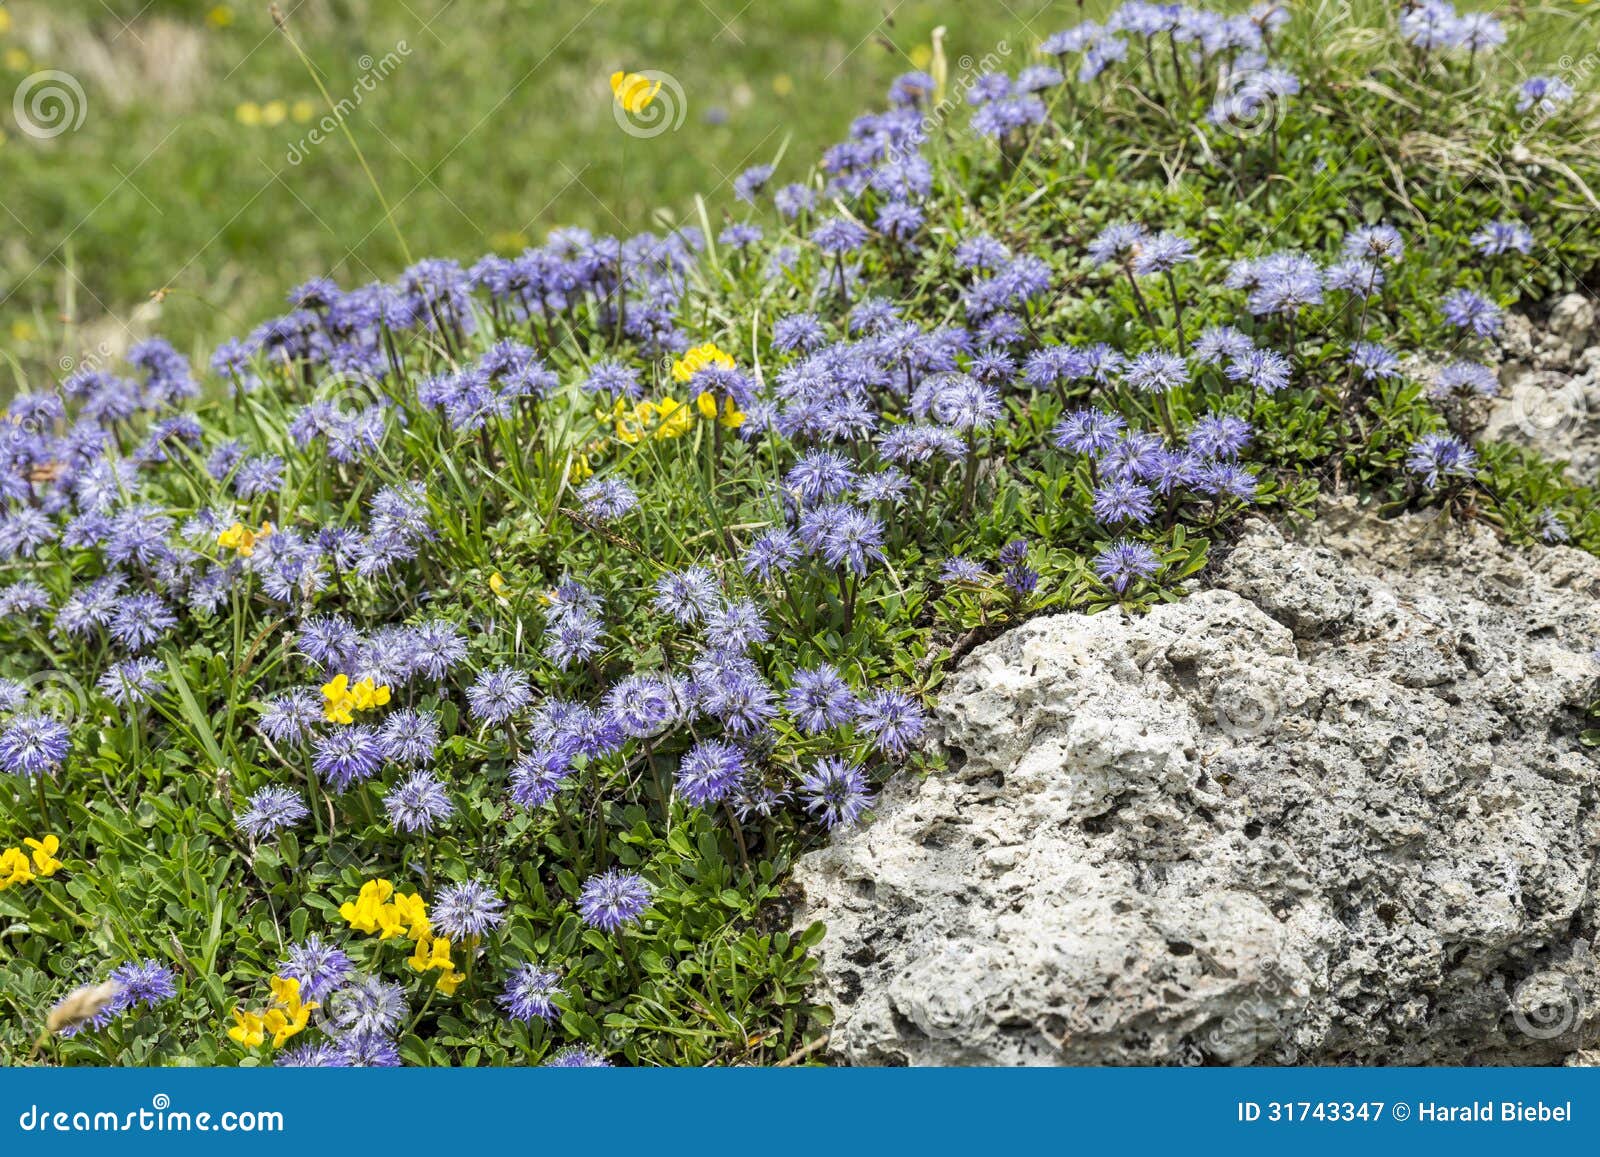 blue balls or globular (globularia cordifolia) flowers